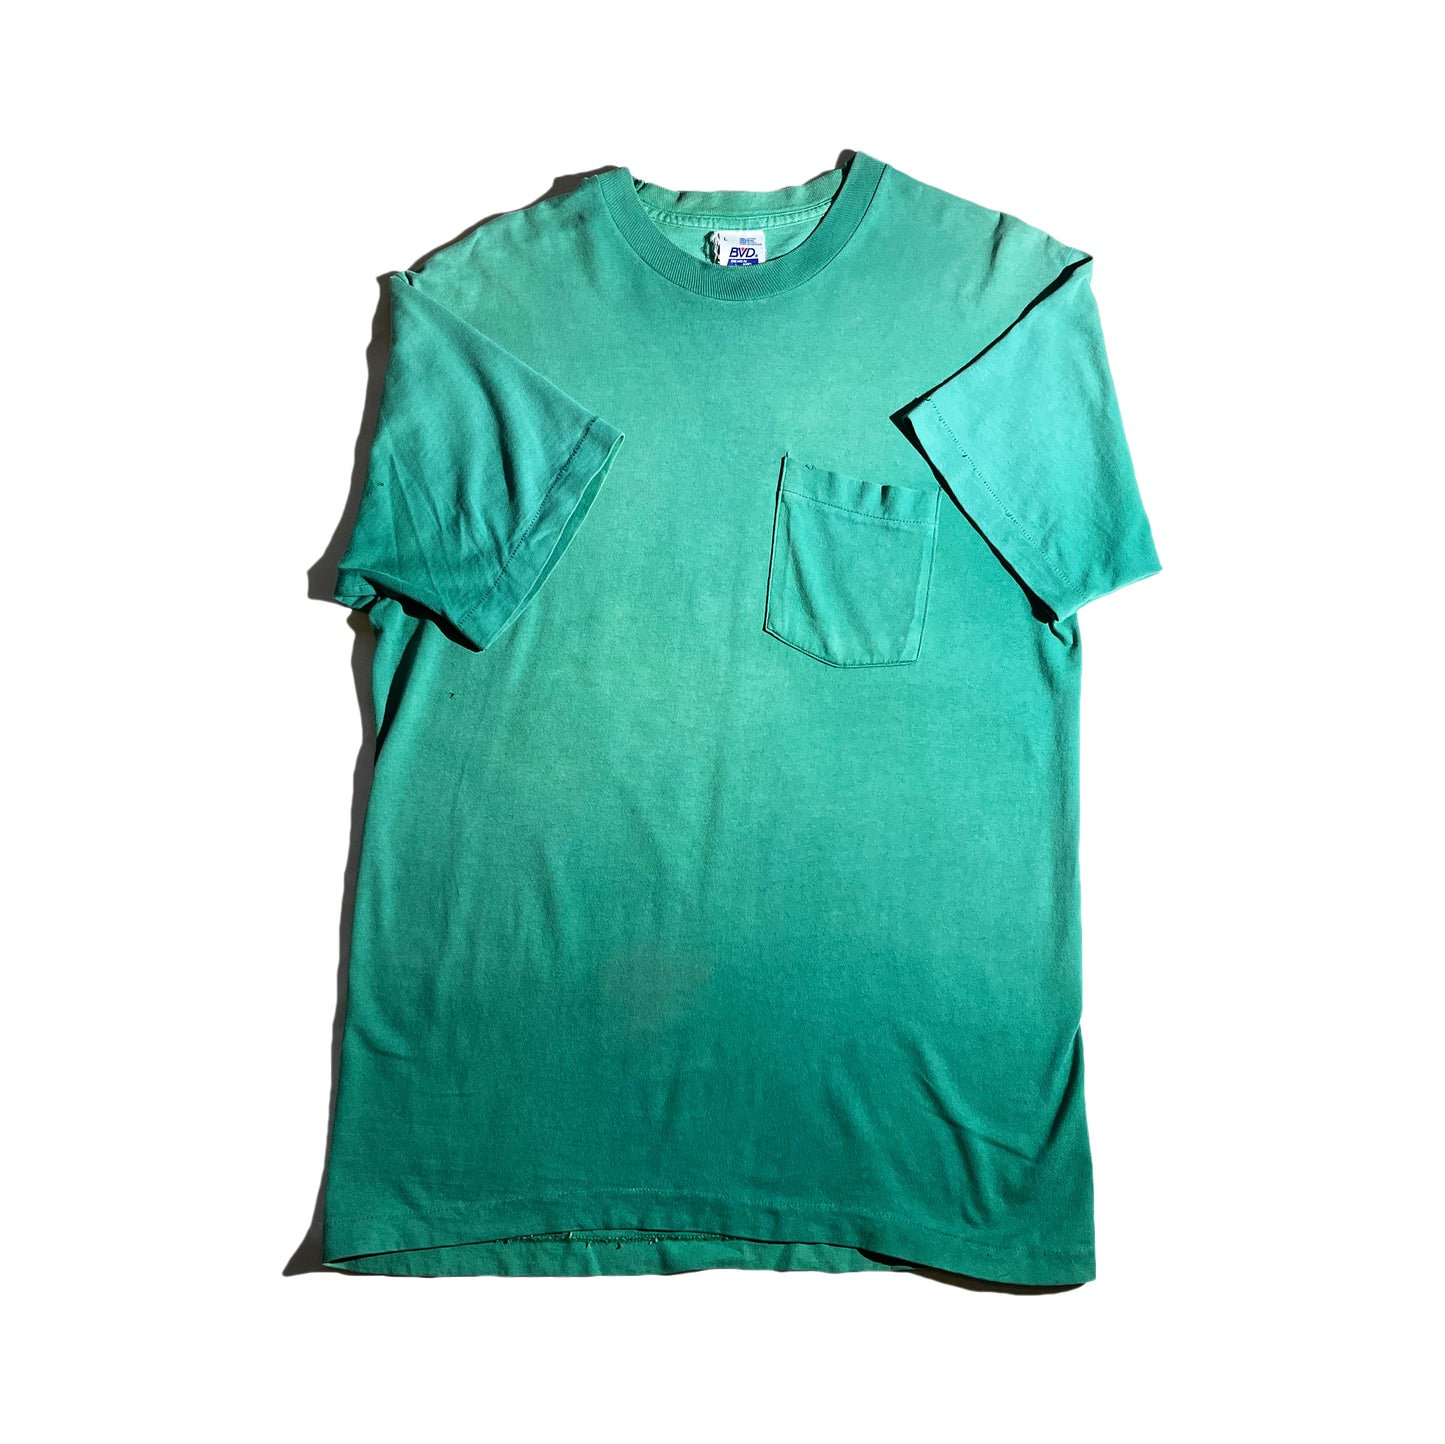 Vintage 90's Single Stitch Blank T-Shirt